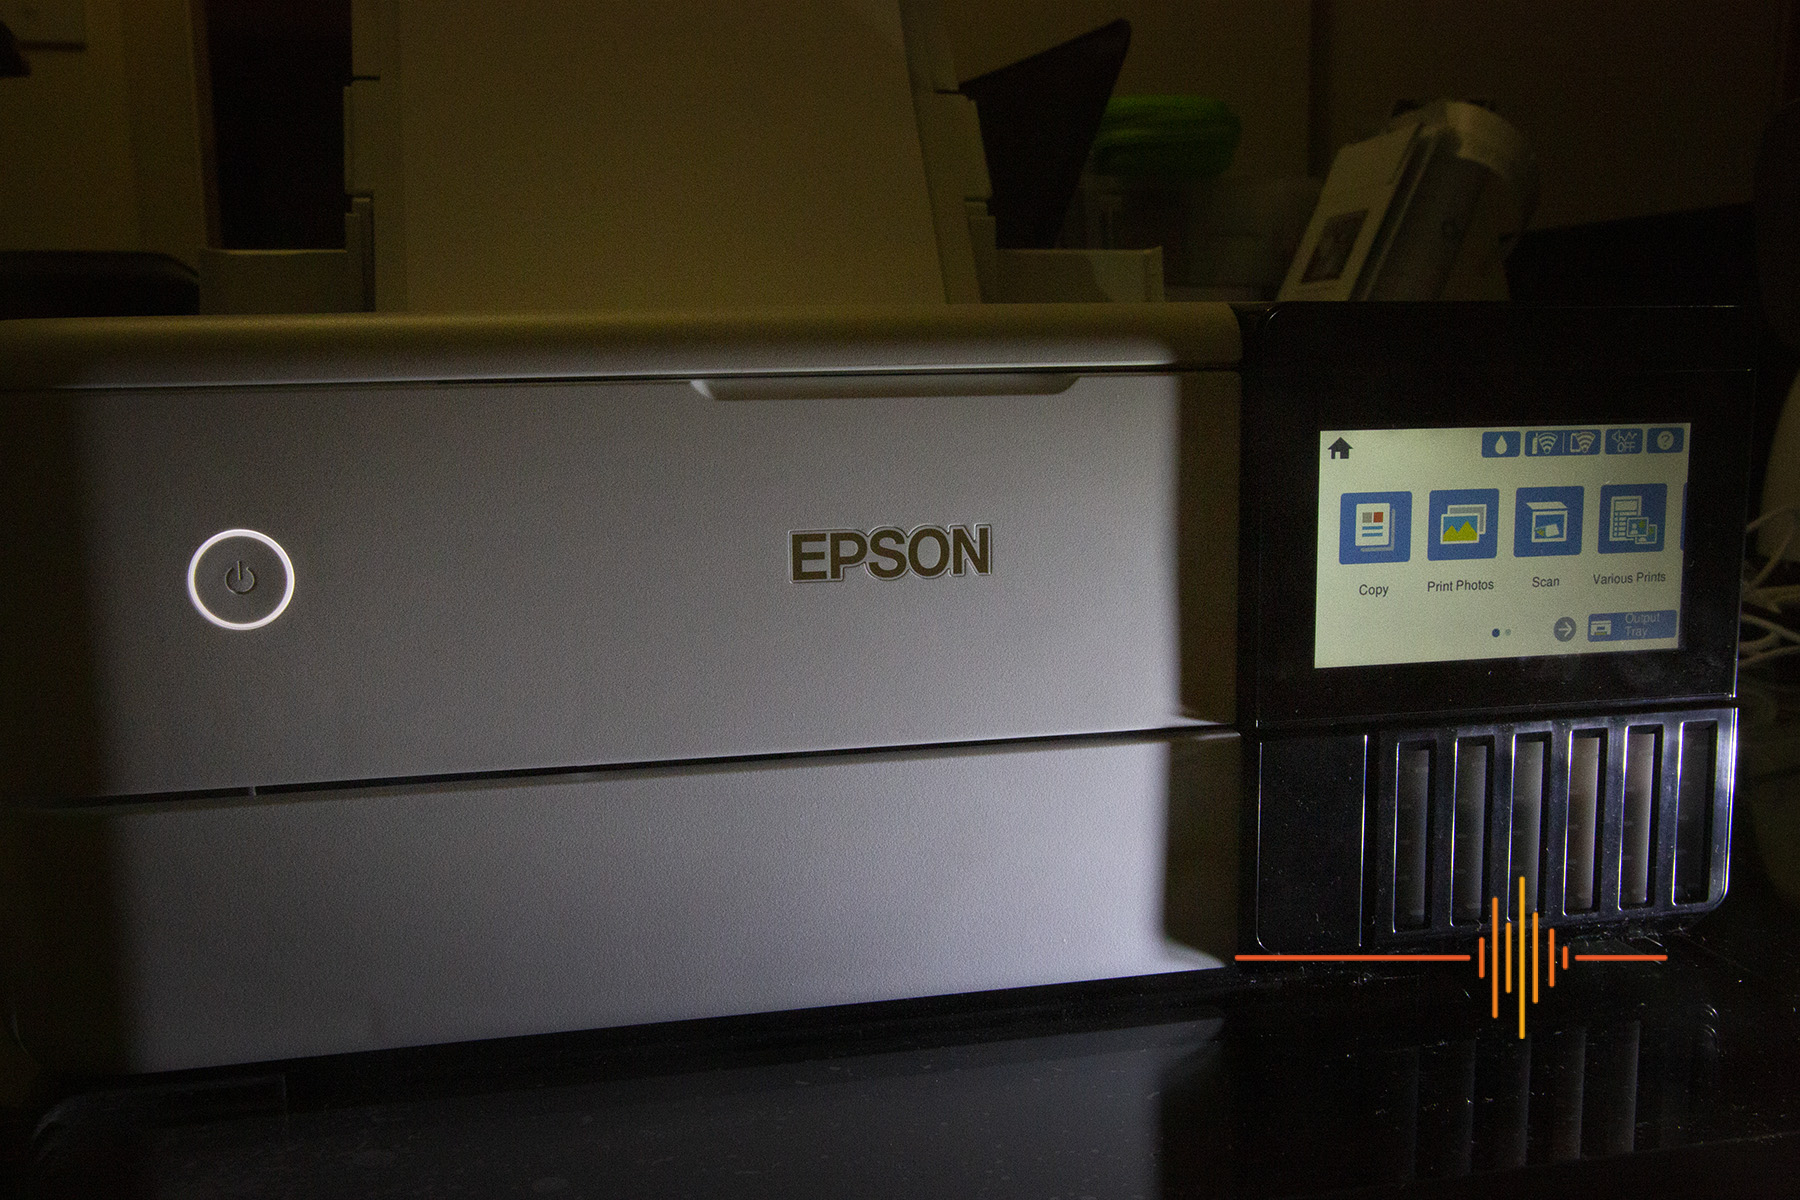 Epson EcoTank Photo ET-8500 - Full of potentials - Digital Reviews